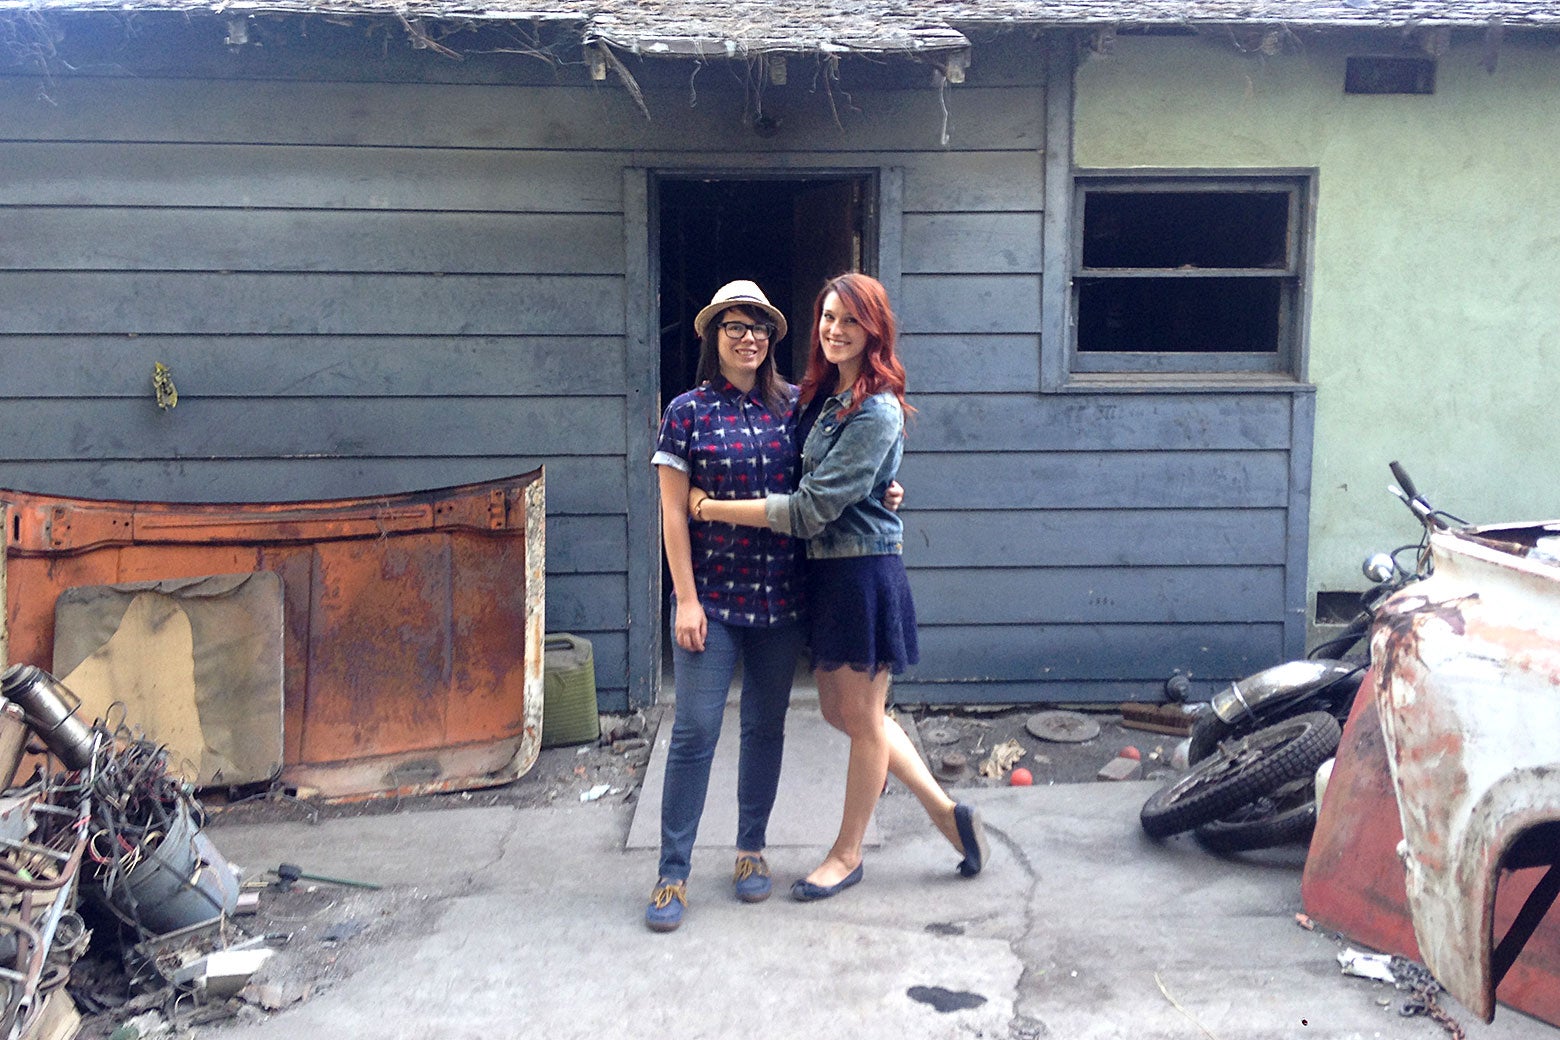 Aubree Bernier-Clarke and Jordan Strang in front of their burned-down shack.